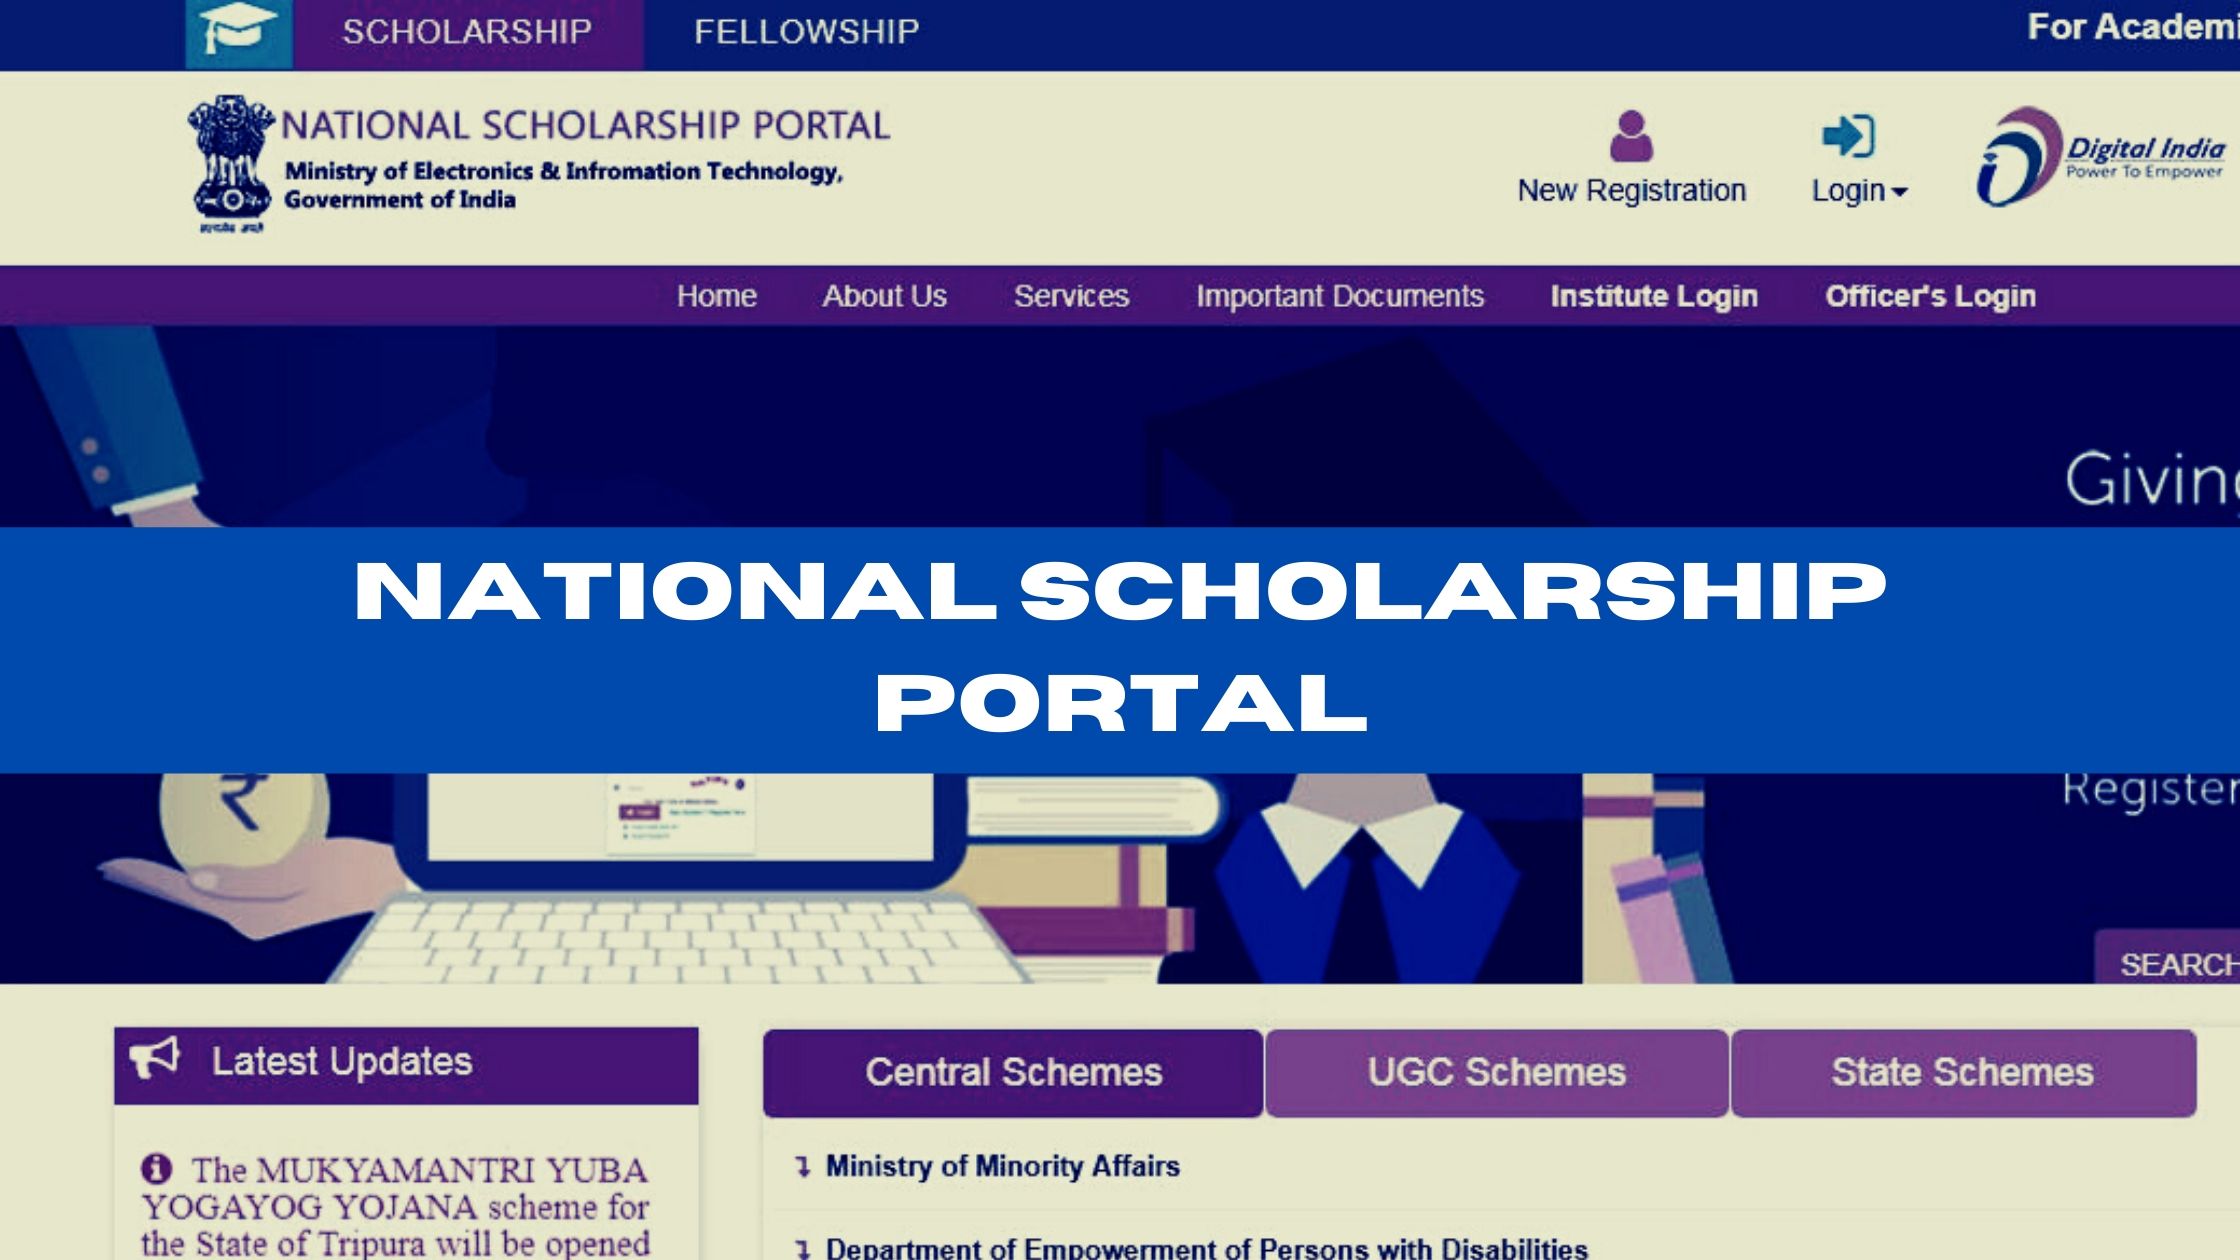 national scholarship portal nsp